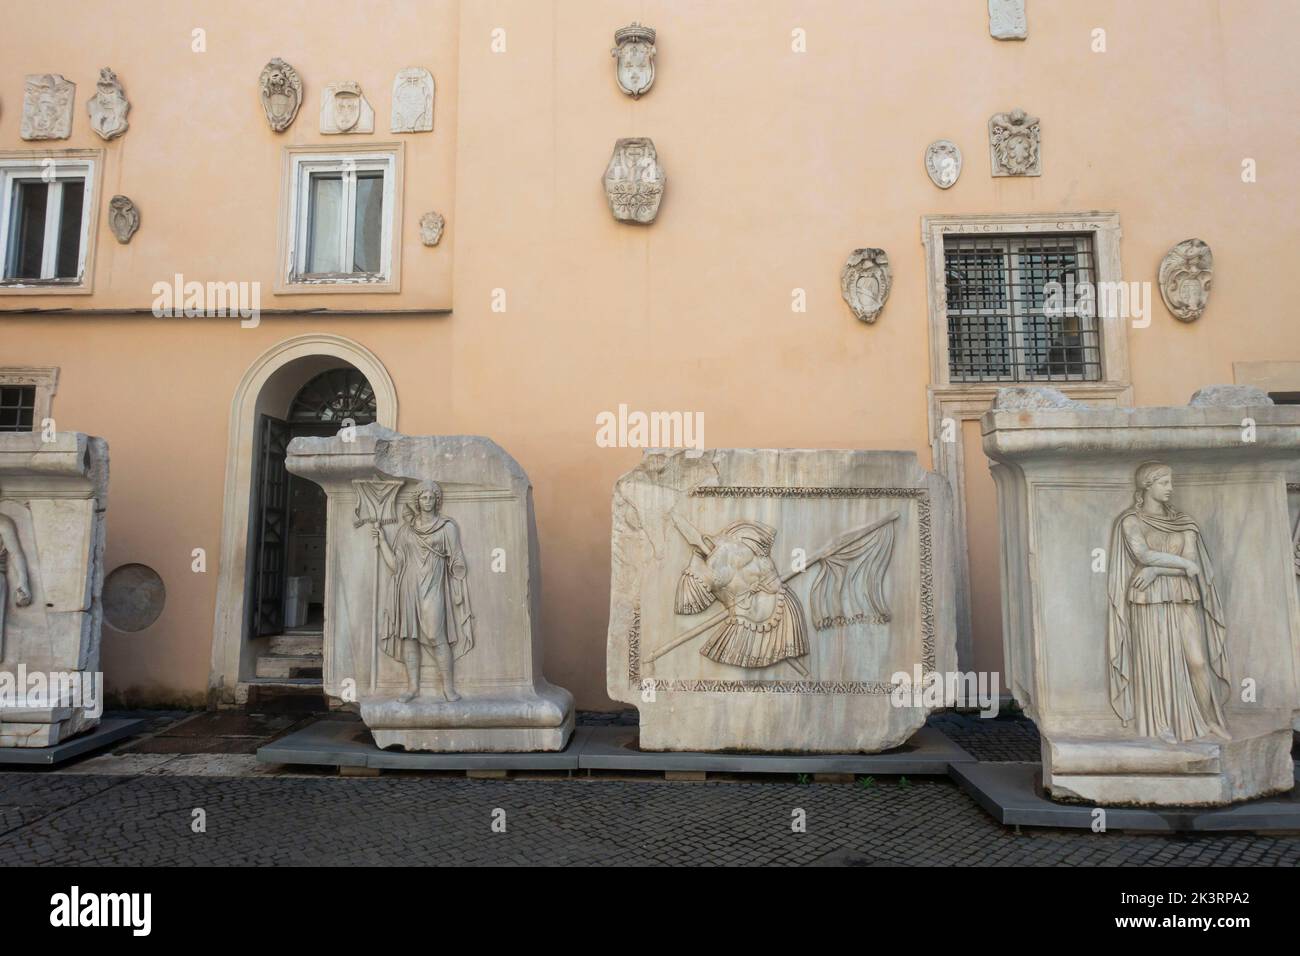 Capitoline Museums, Courtyard of Palazzo dei Conservatori, Rome Stock Photo